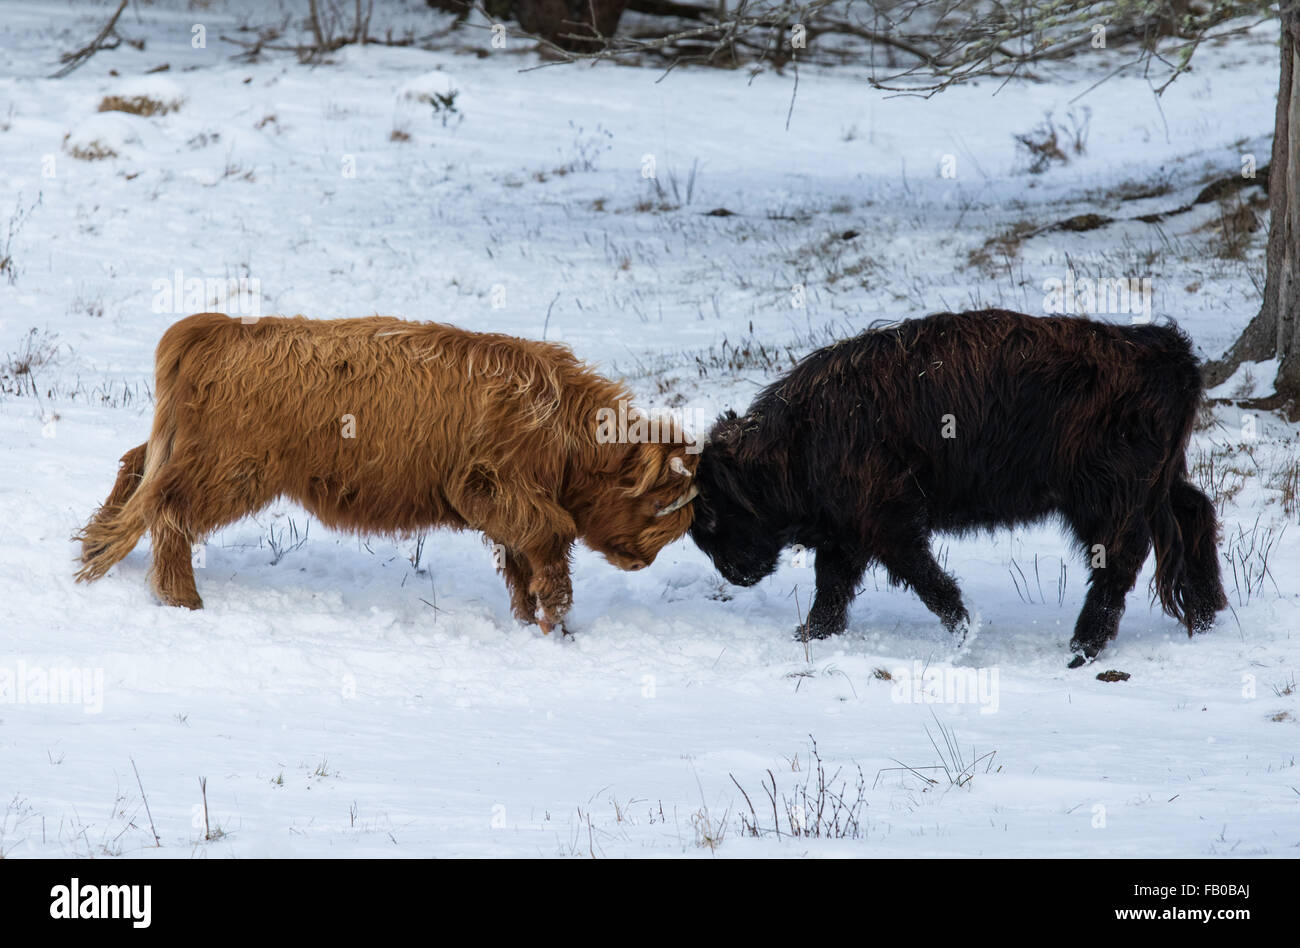 Scottish Highland calves fighting Stock Photo